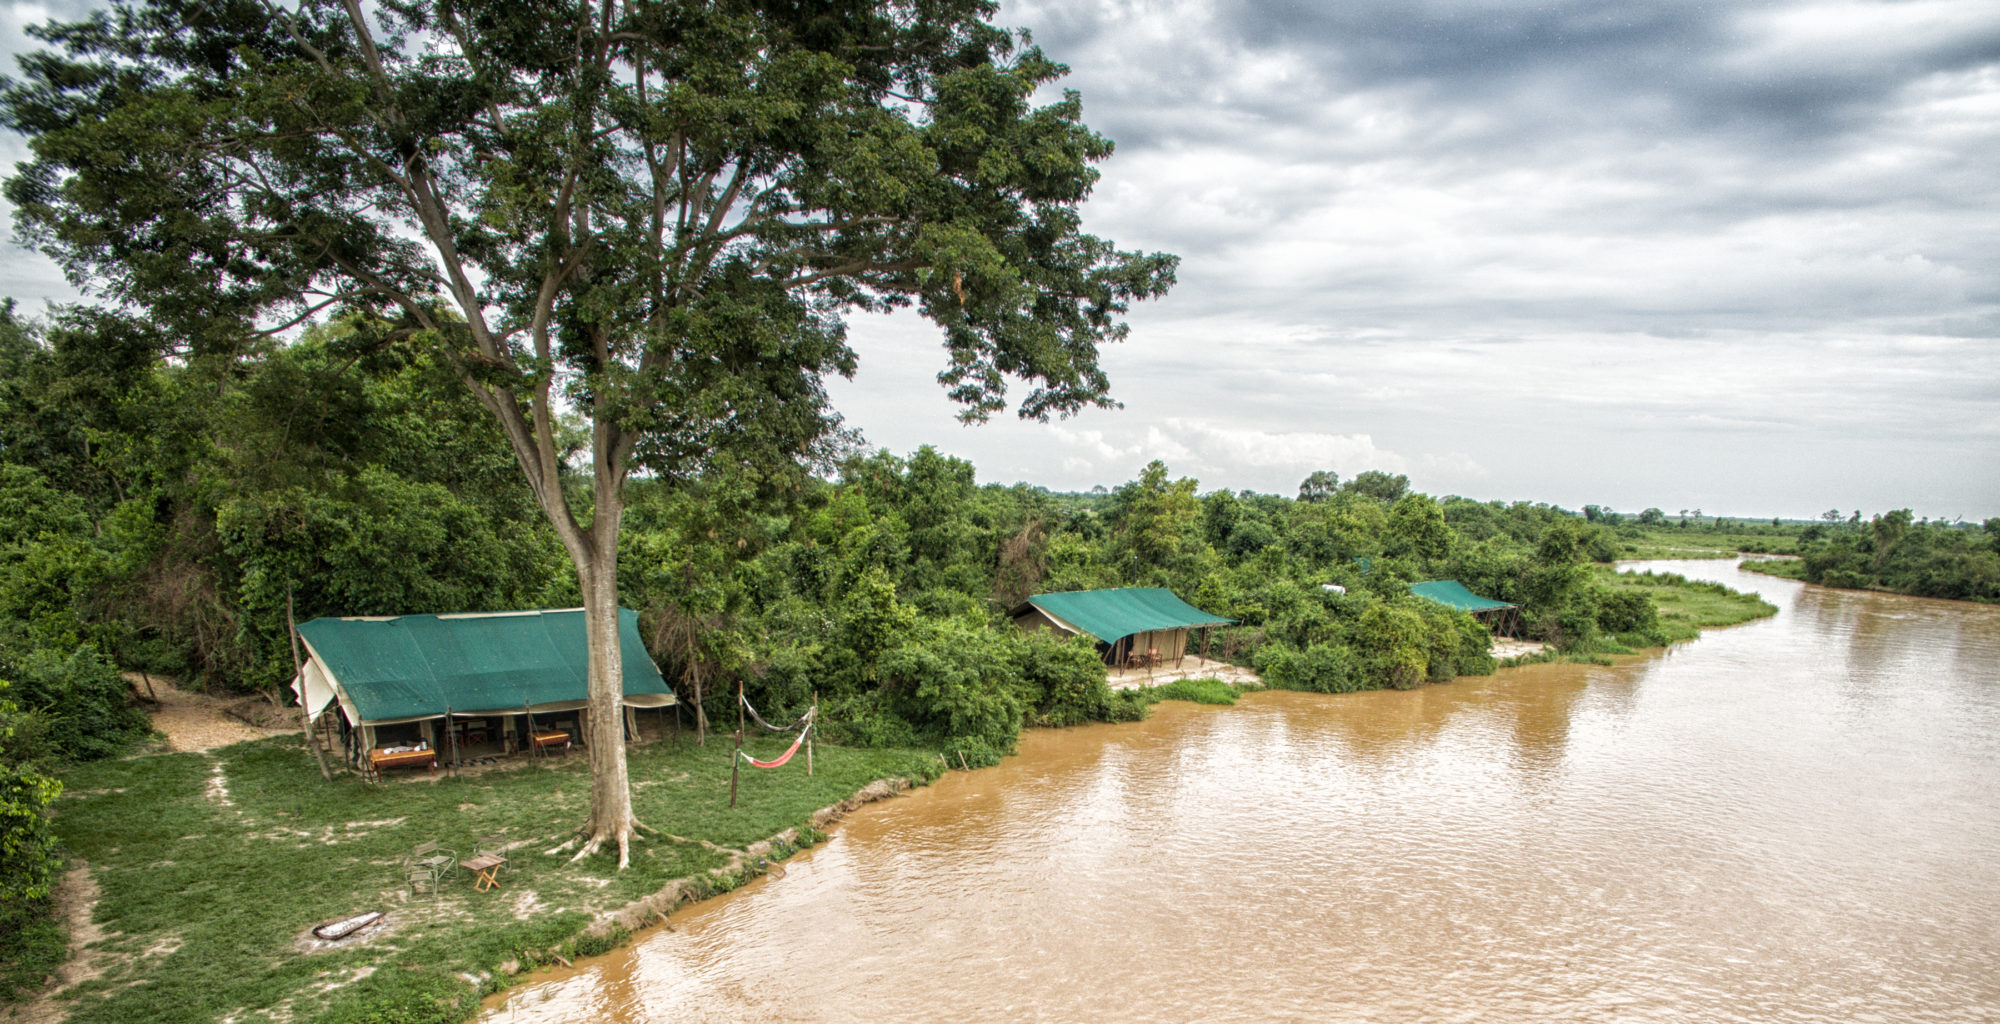 DRC-Verunga-Lulimbi-Tented-Camp-Position-on-River